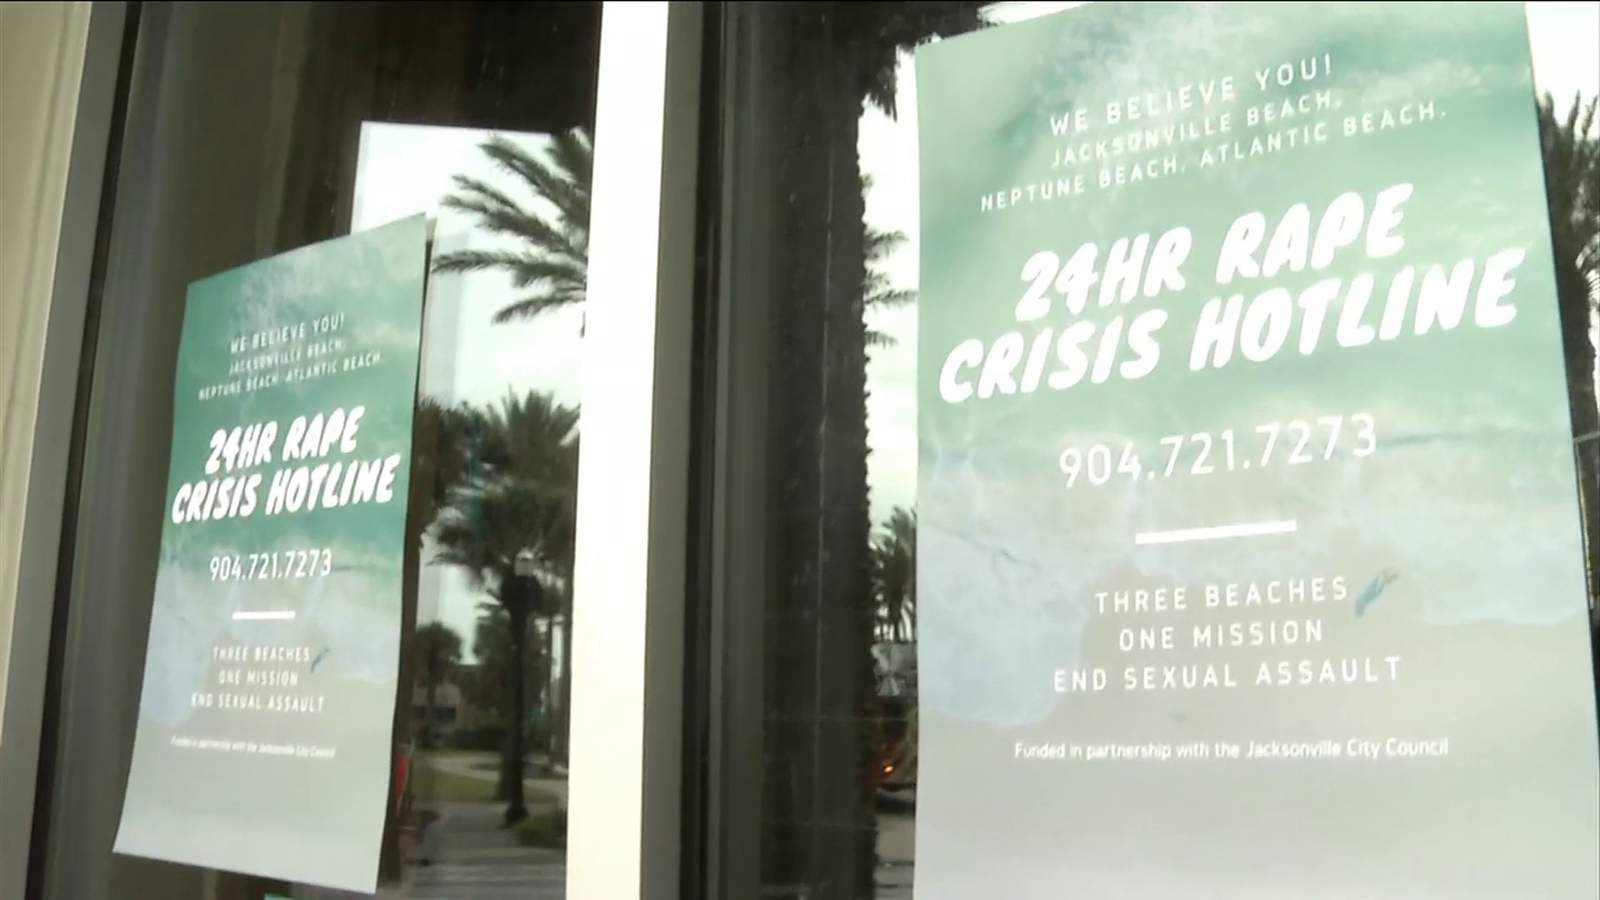 Jacksonville’s beaches launch sexual assault awareness campaign